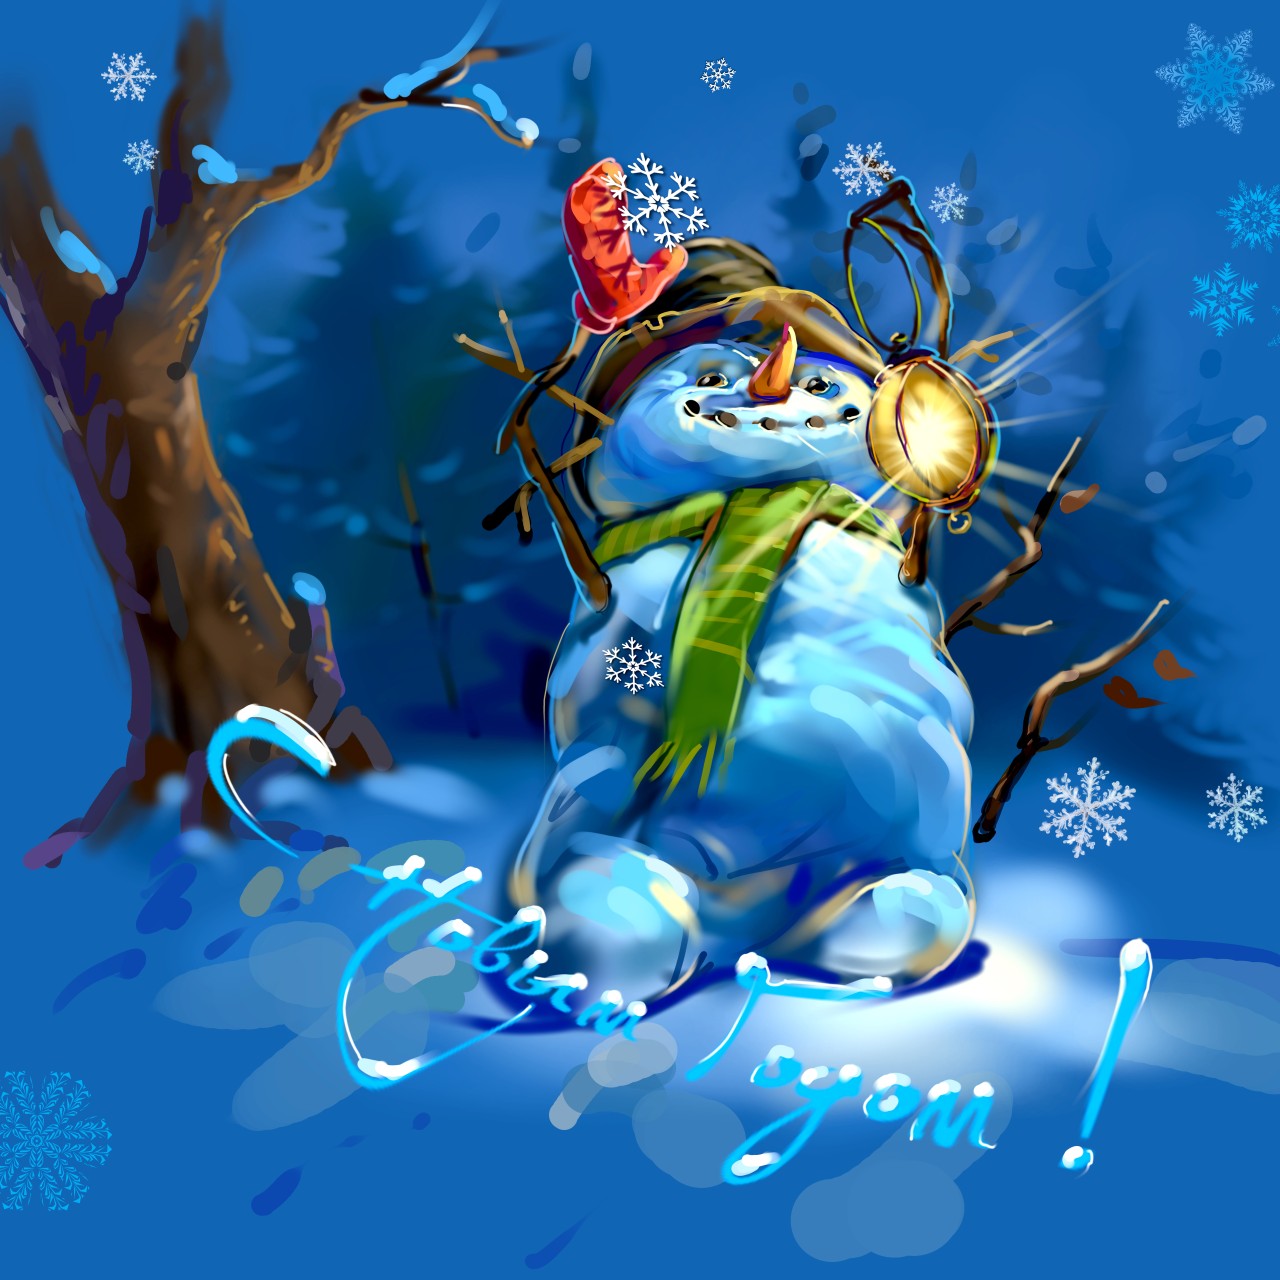 Снеговик и фонарик (Серия "Снеговик и снежинка") Эскиз для марки